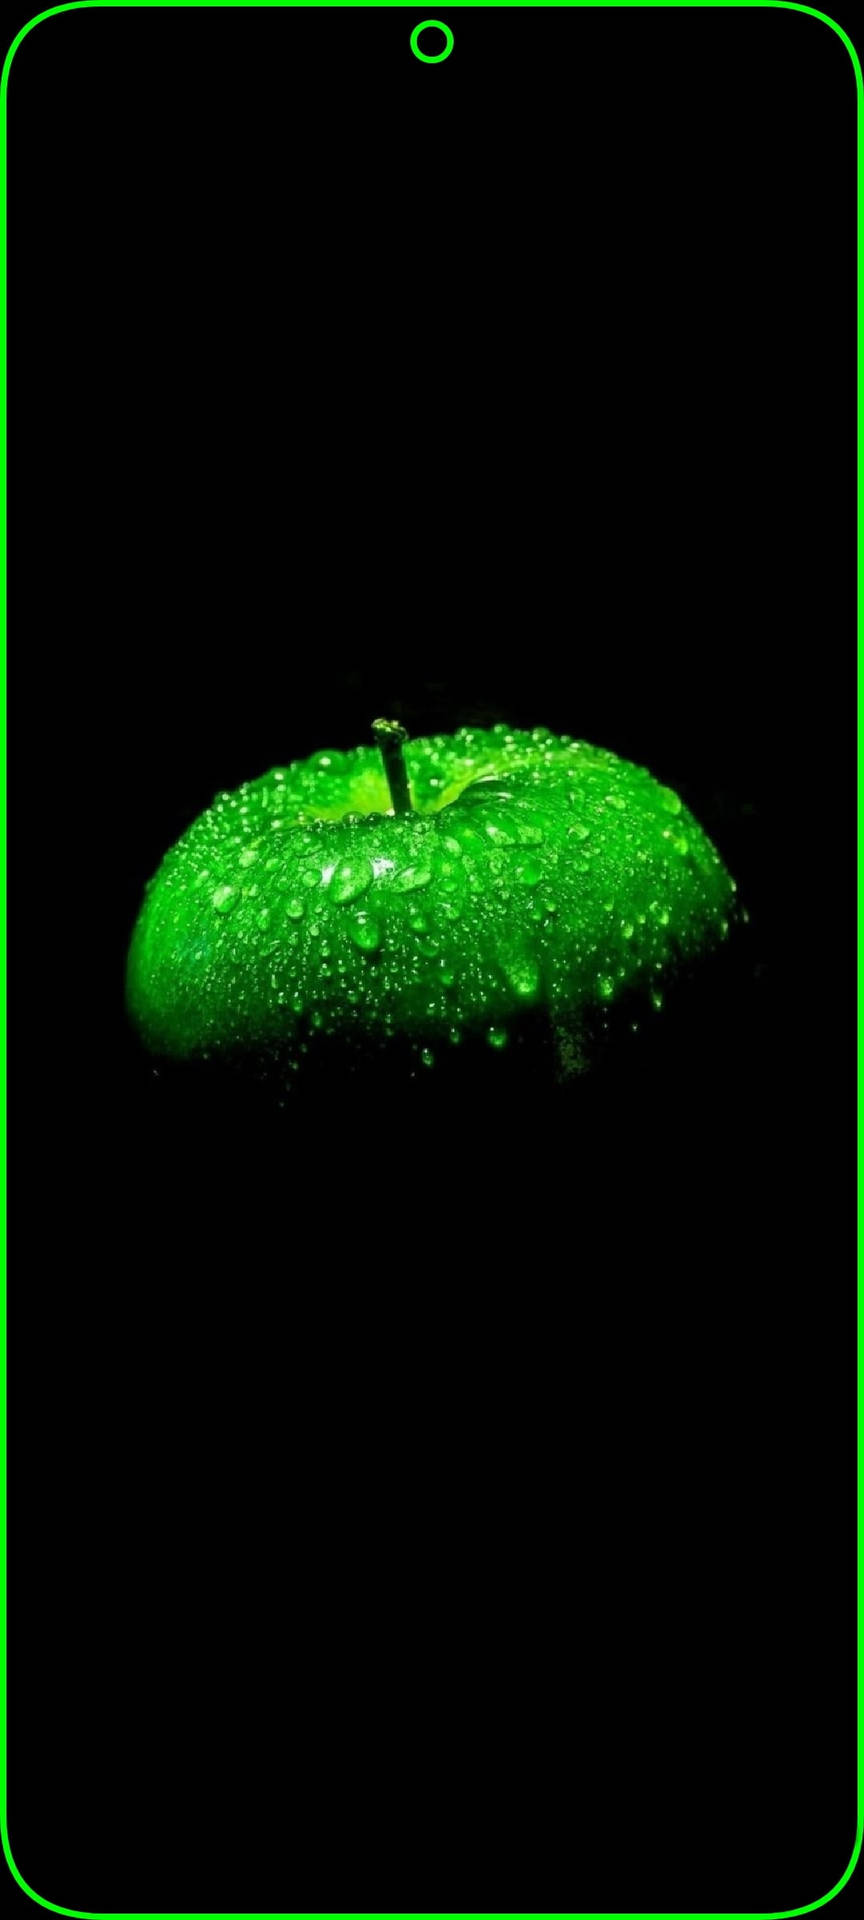 Green Apple Punch Hole 4k Wallpaper